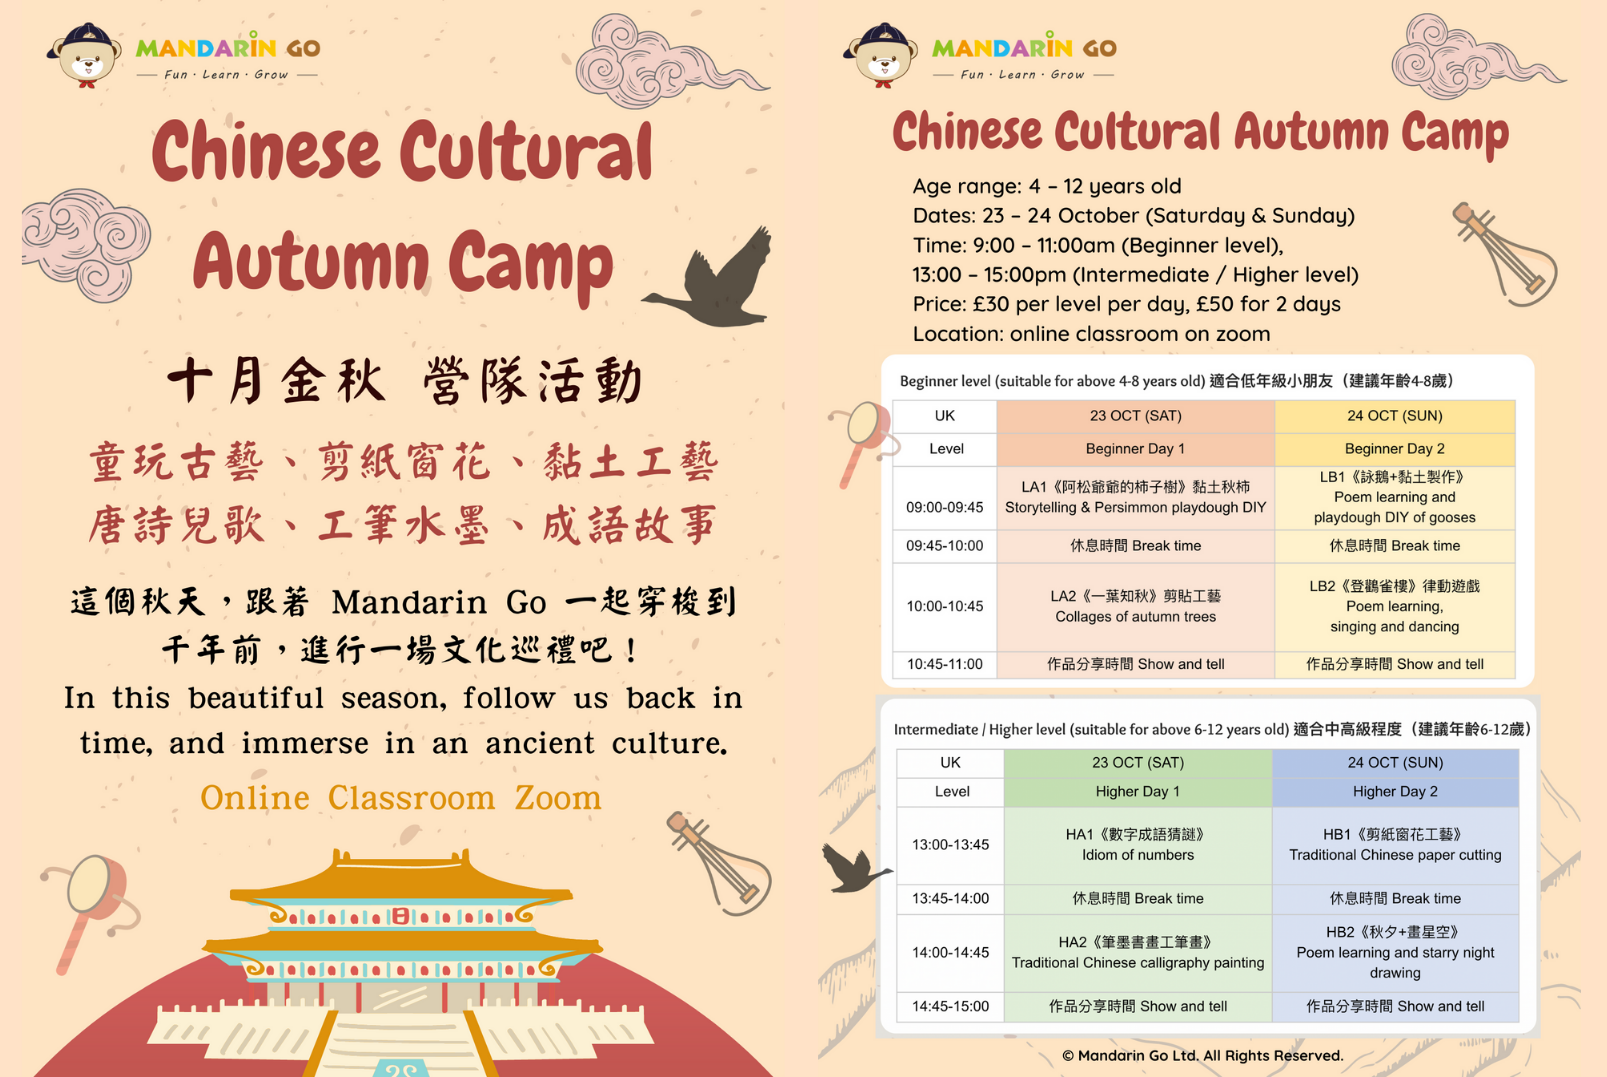 Mandarin Go 文化秋令營 Chinese Cultural Autumn Camp